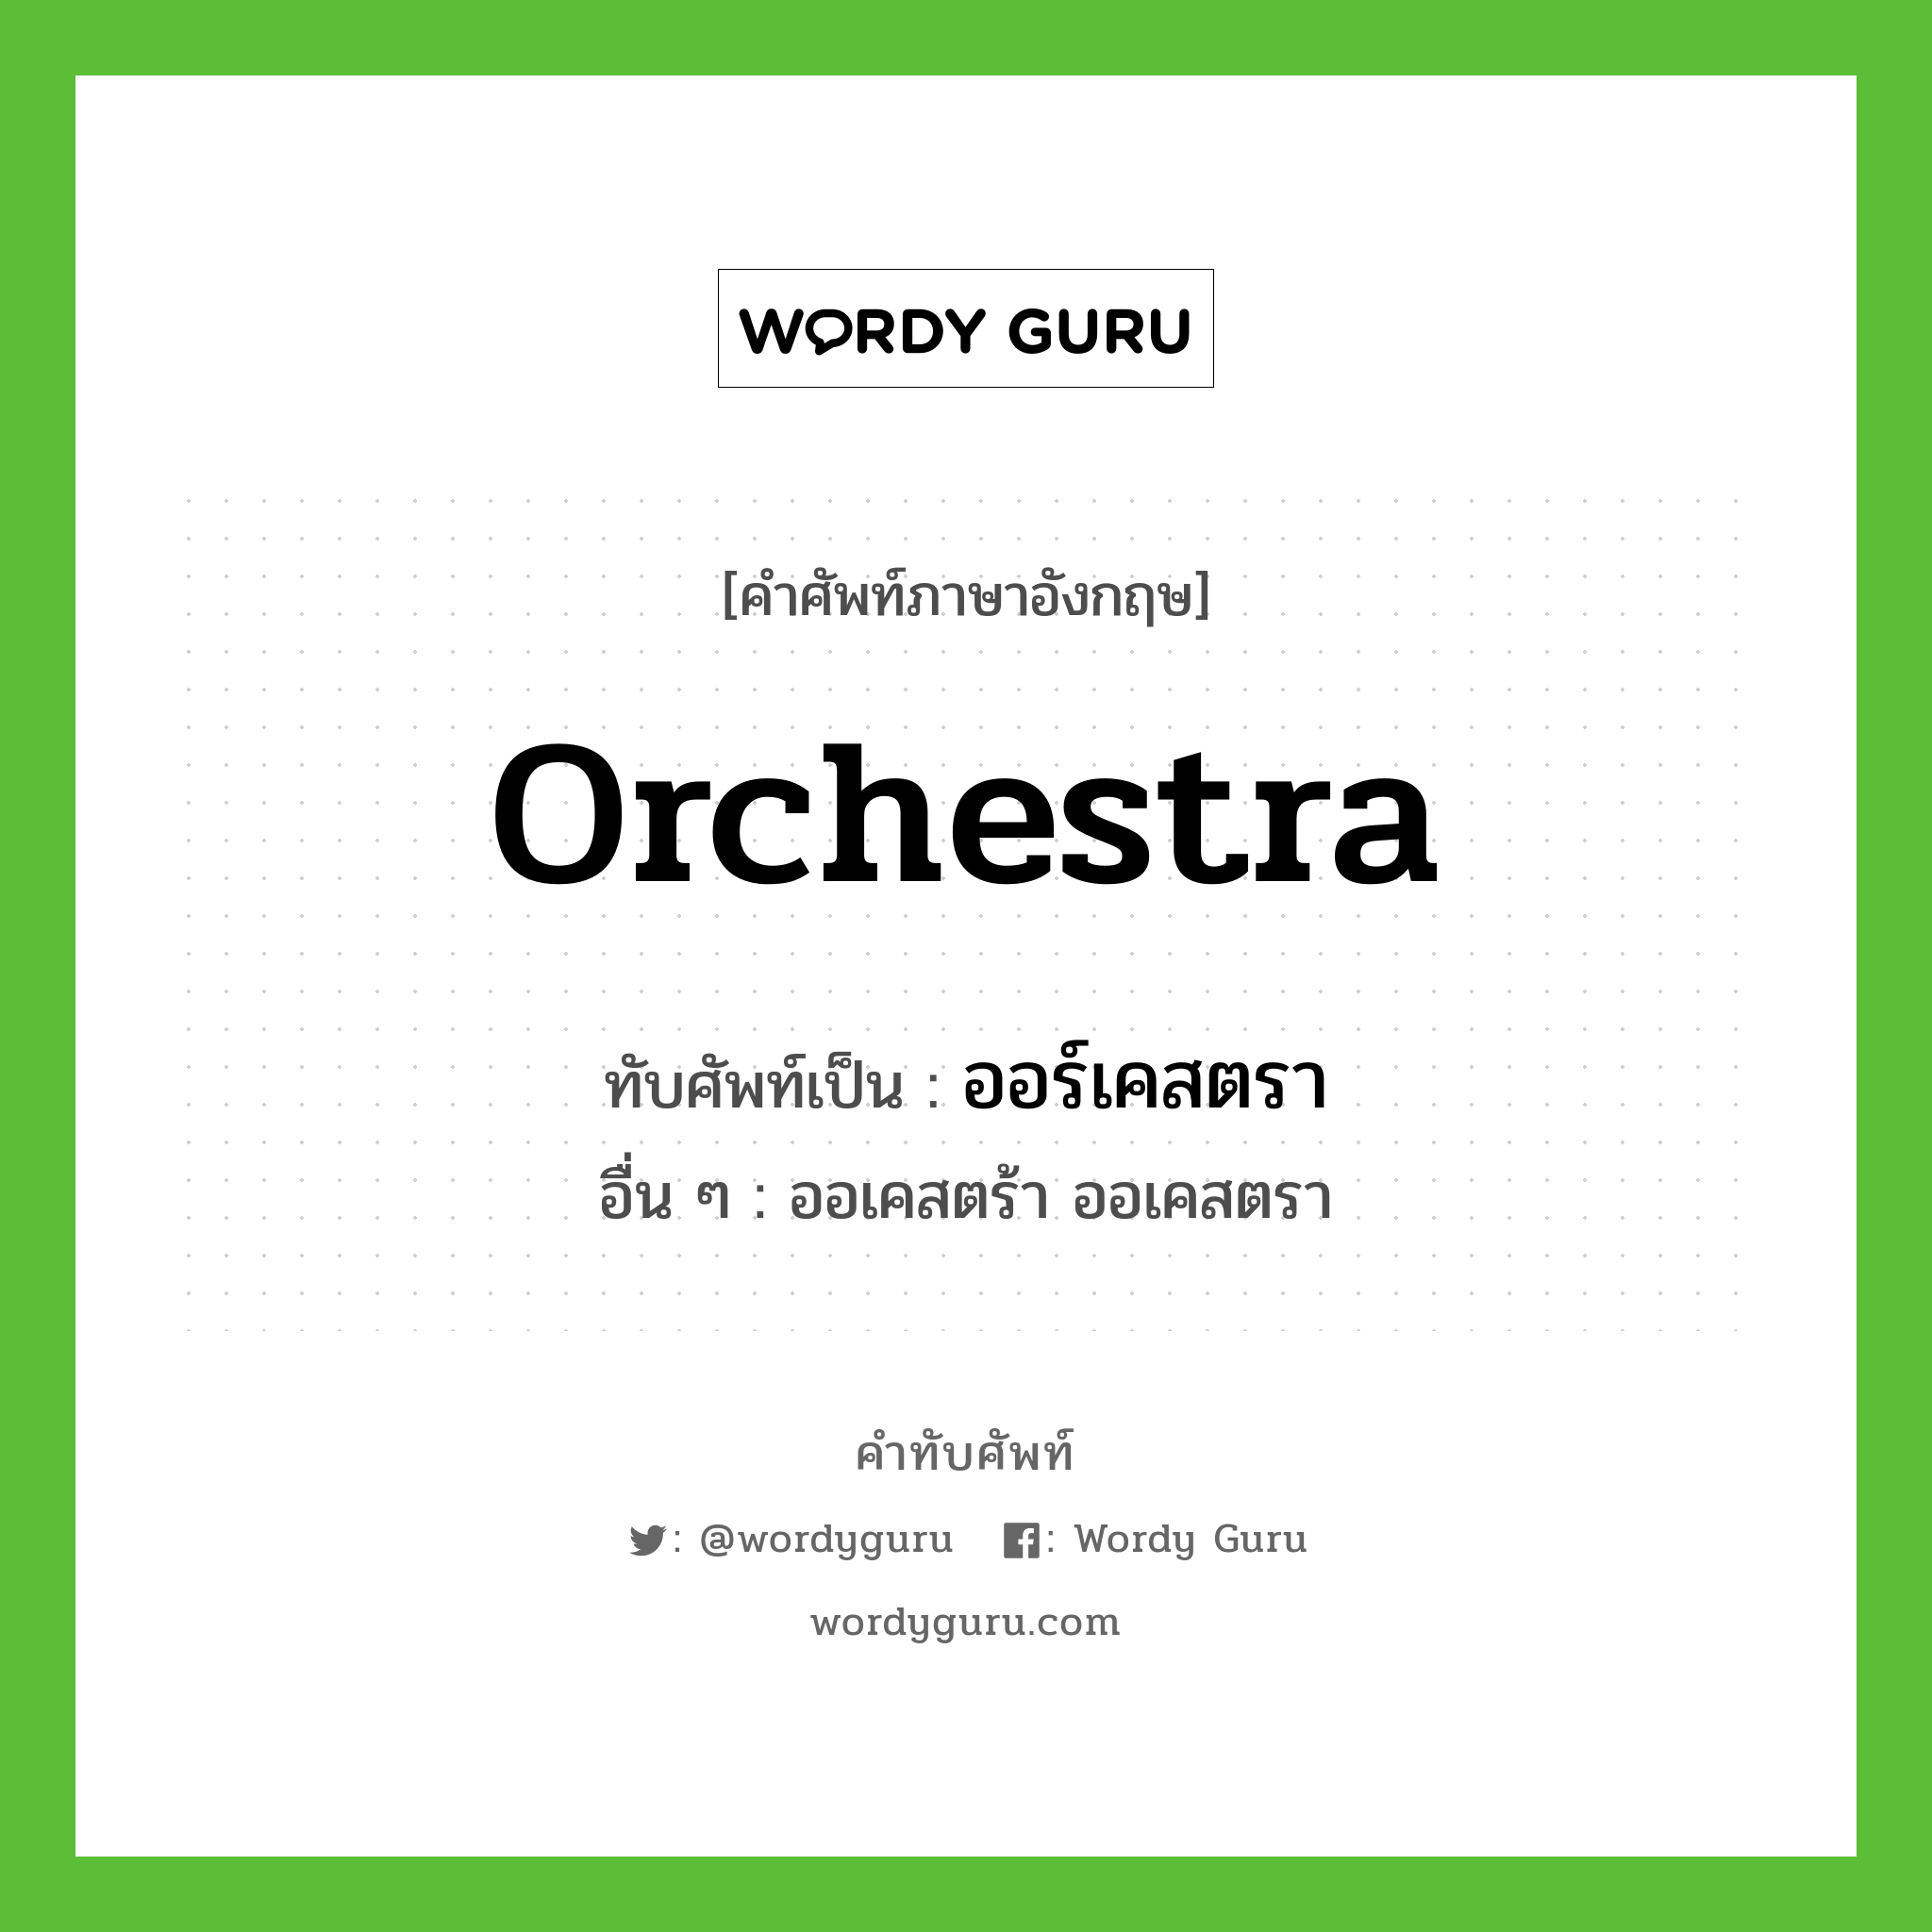 orchestra เขียนเป็นคำไทยว่าอะไร?, คำศัพท์ภาษาอังกฤษ orchestra ทับศัพท์เป็น ออร์เคสตรา อื่น ๆ ออเคสตร้า ออเคสตรา